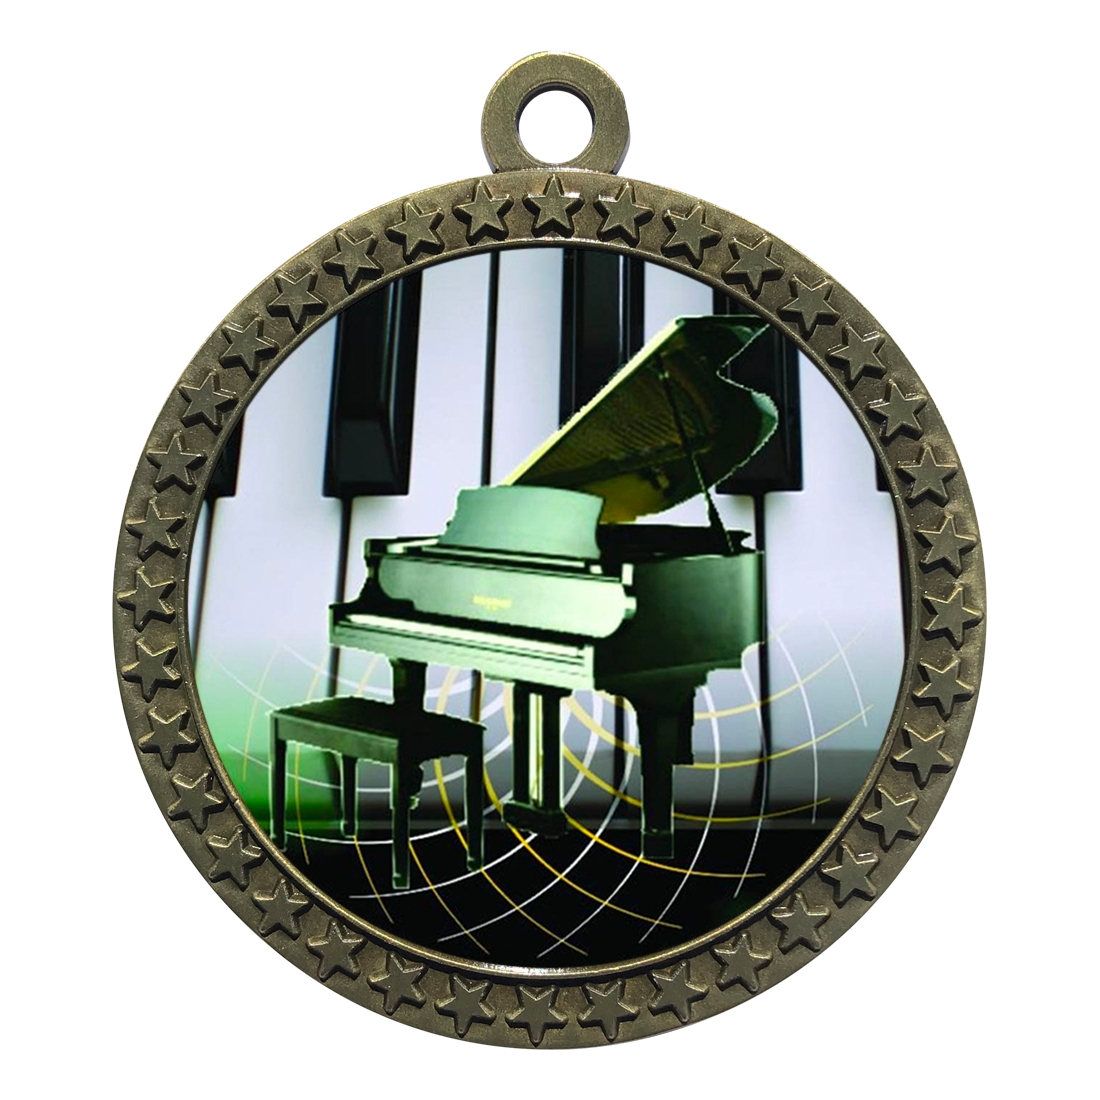 2-1/2" Piano Medal